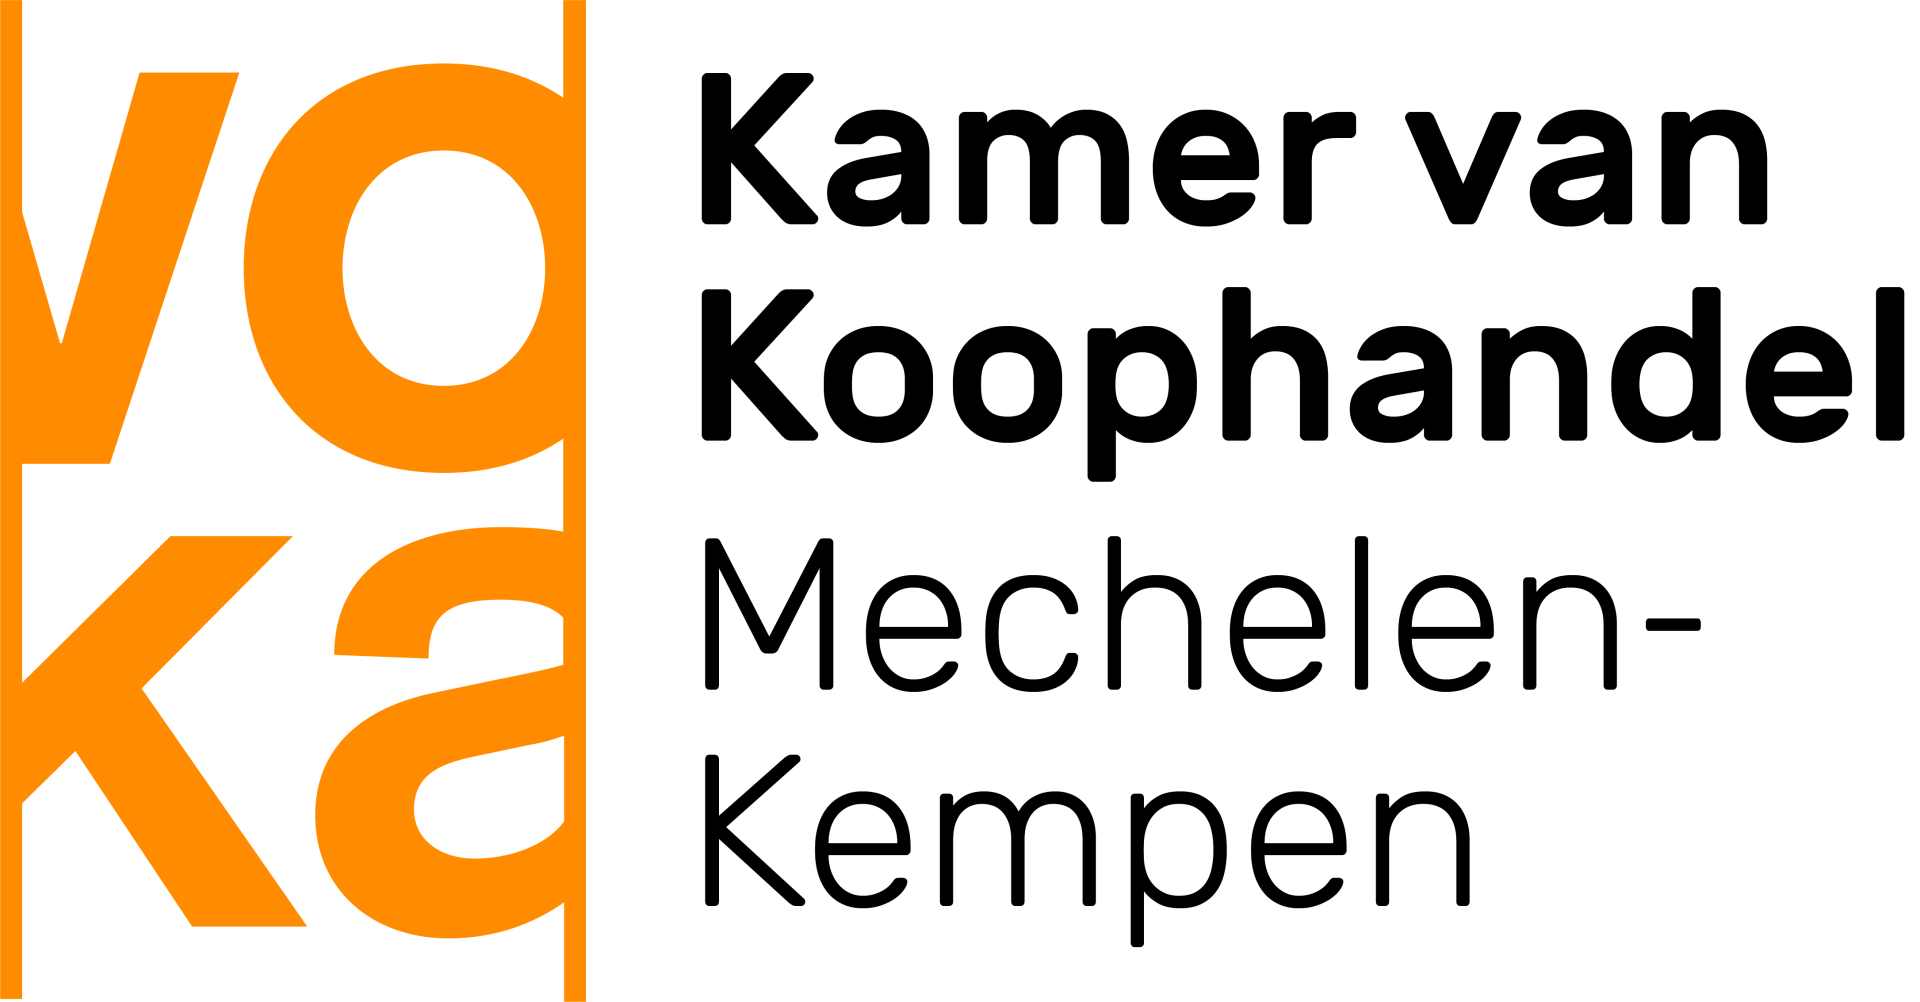 MK logo